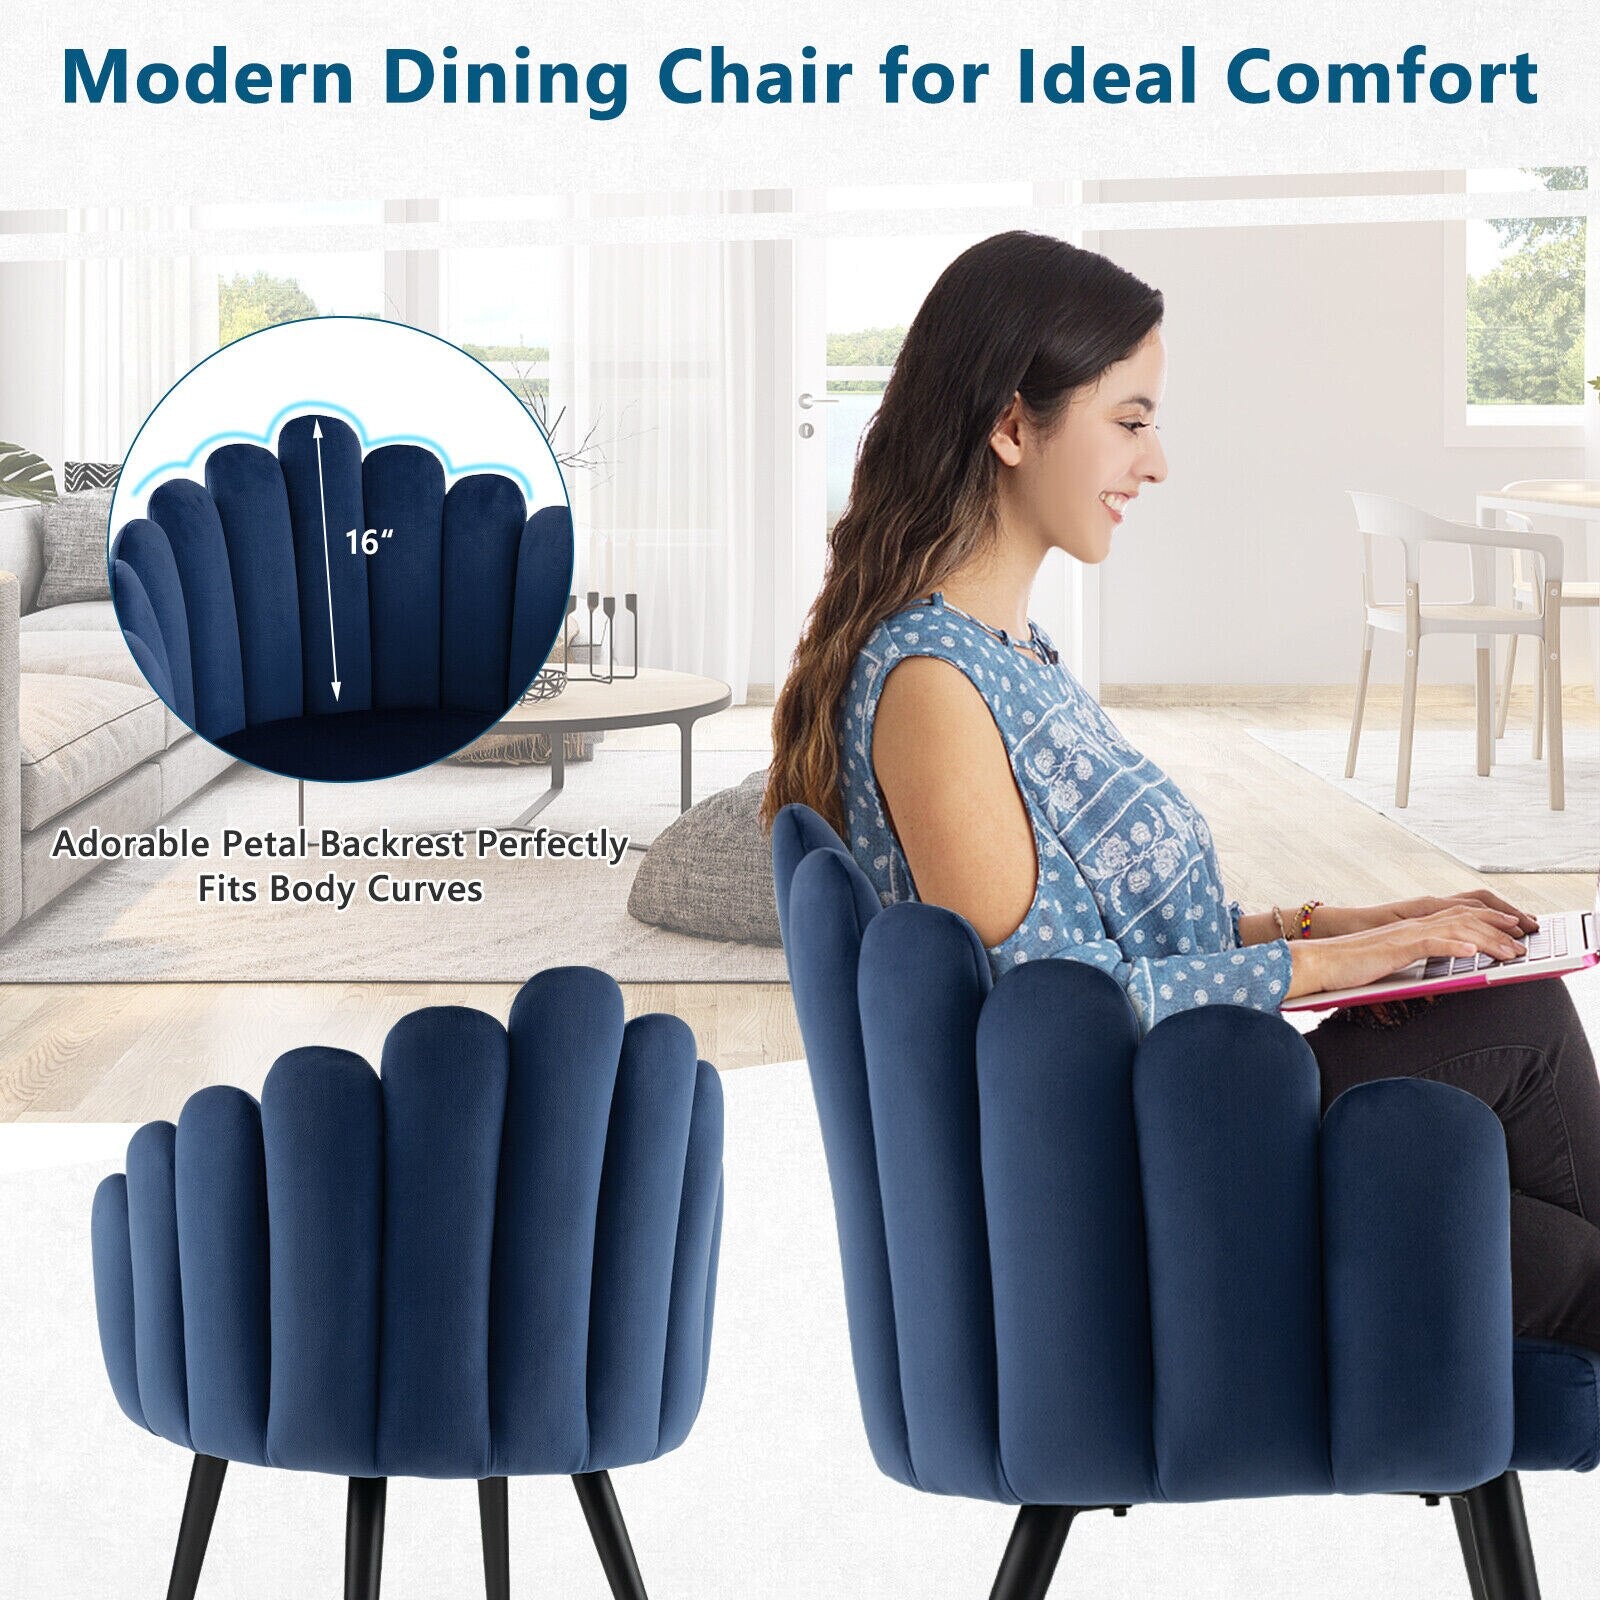 Homio Decor Living Room Set of 2 Costway Velvet Dining Chair (Set of 2)